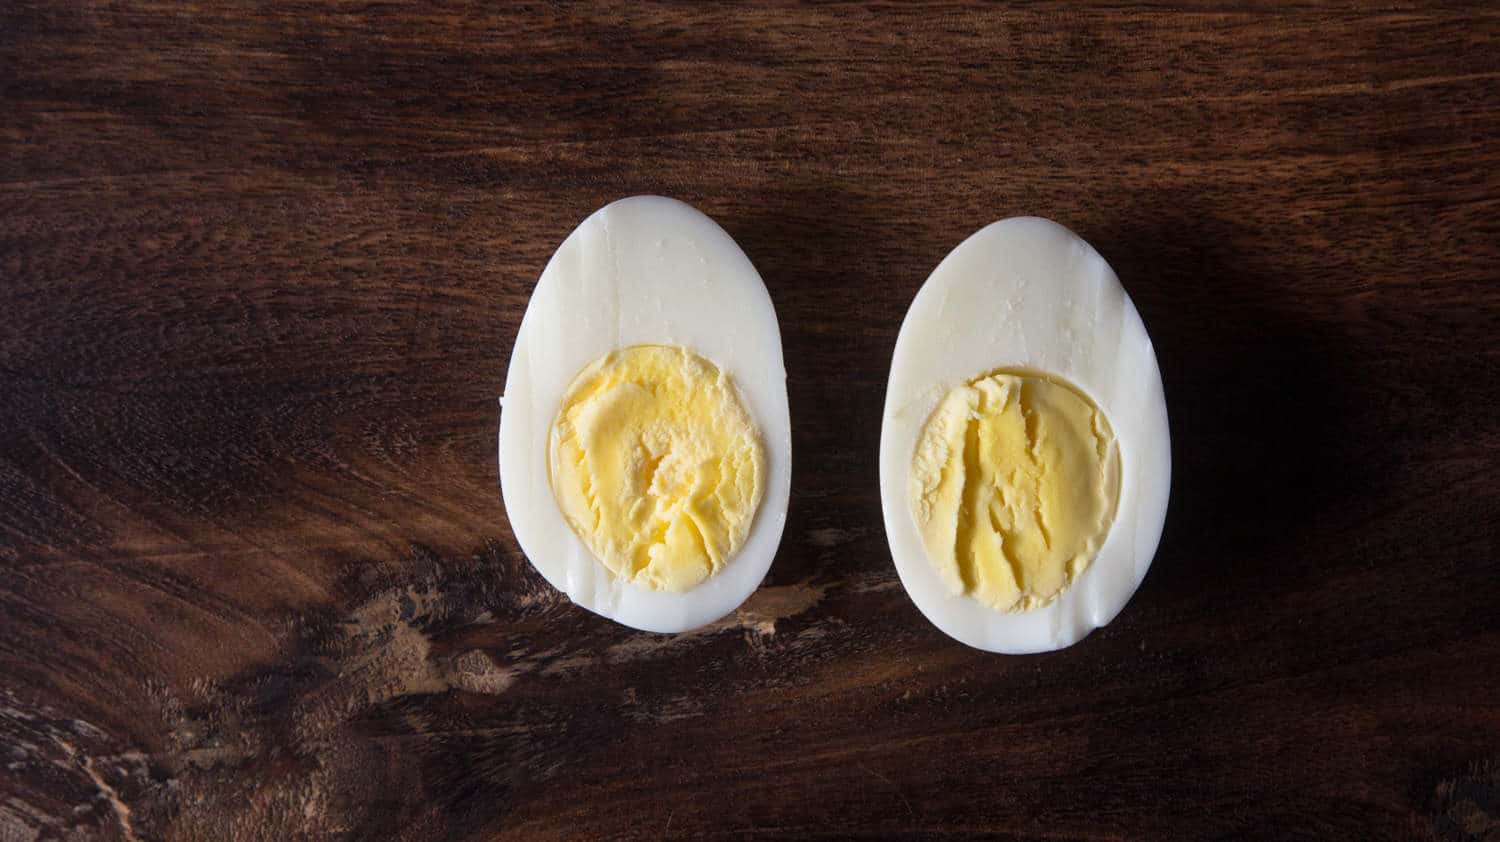 https://www.pressurecookrecipes.com/wp-content/uploads/2017/02/instant-pot-hard-boiled-eggs-2.jpg